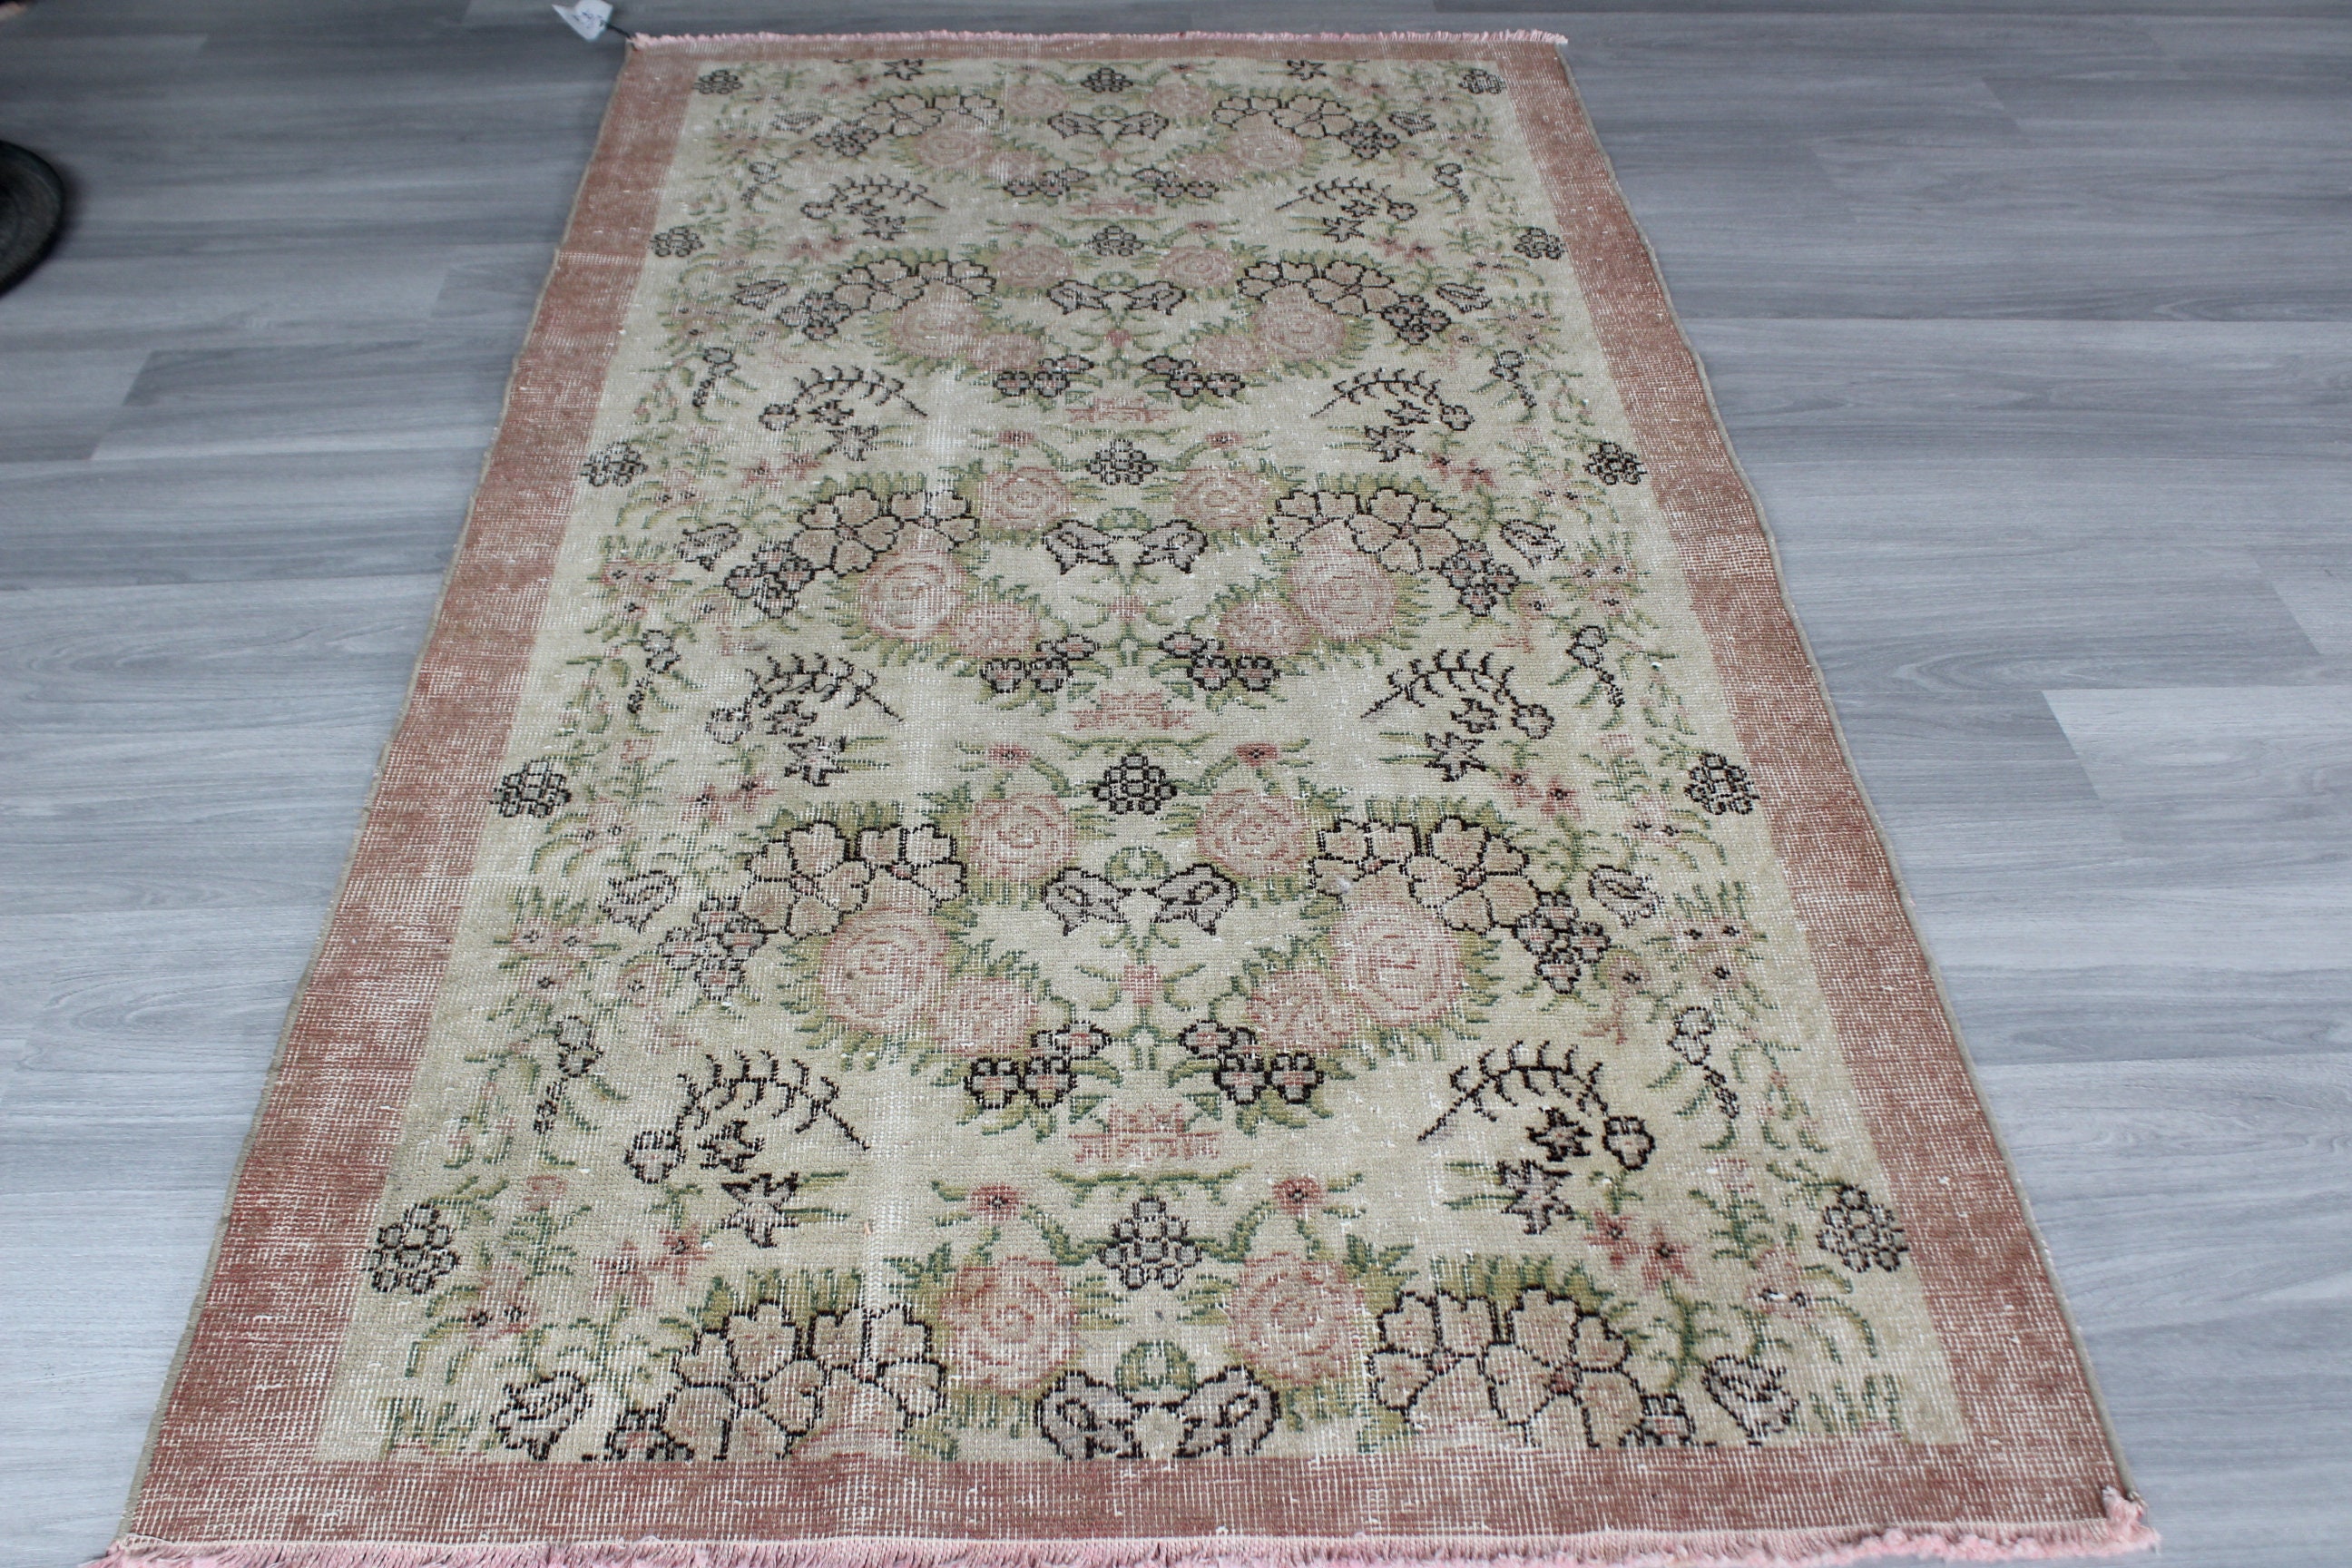 red rug,overdyed rug faded rug,handknotted rug,muted rug anatolian rug turkish rug oushak rug,3'9x6'6 feet distressed rug antique rug